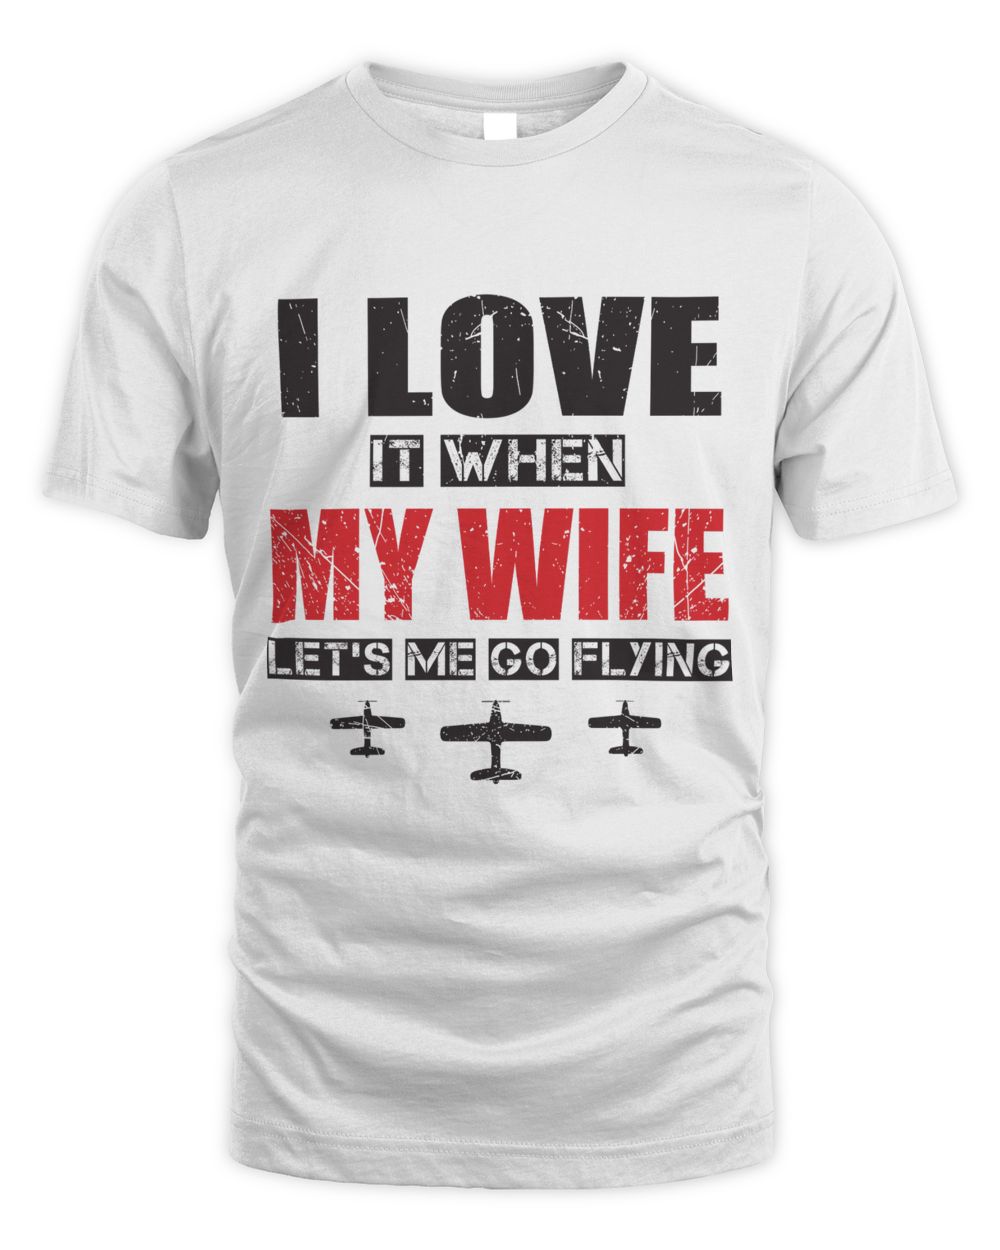 I love it when my wife let's me go flying Unisex Standard T-Shirt white 